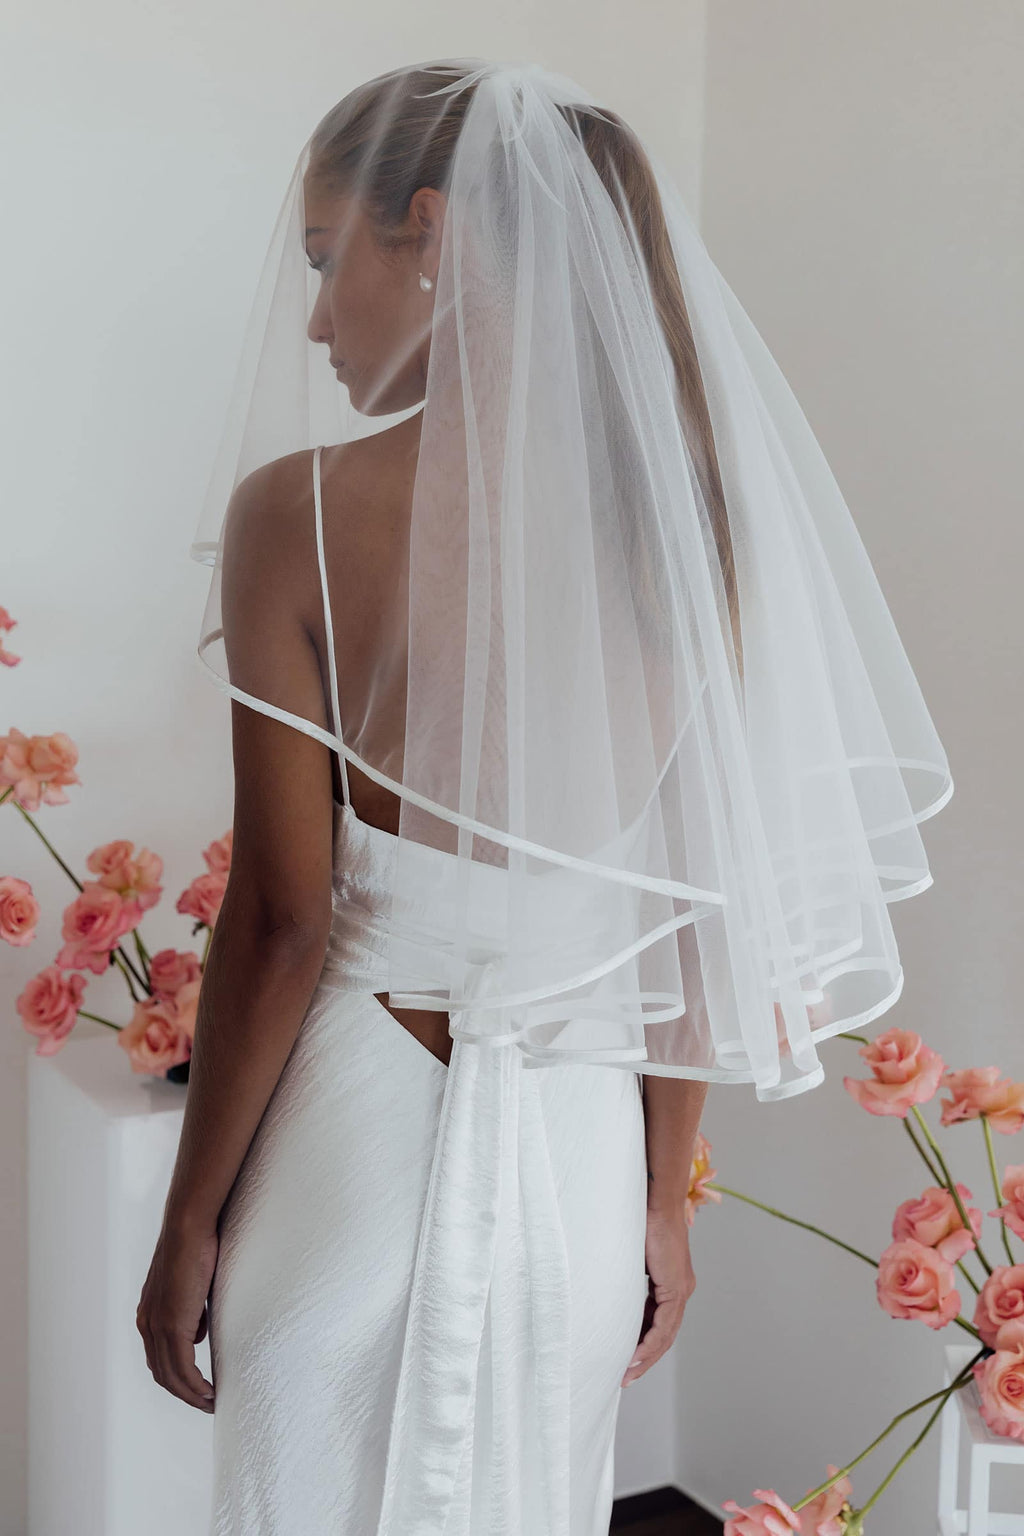 Grace Loves Lace Oceania Bridal Veil